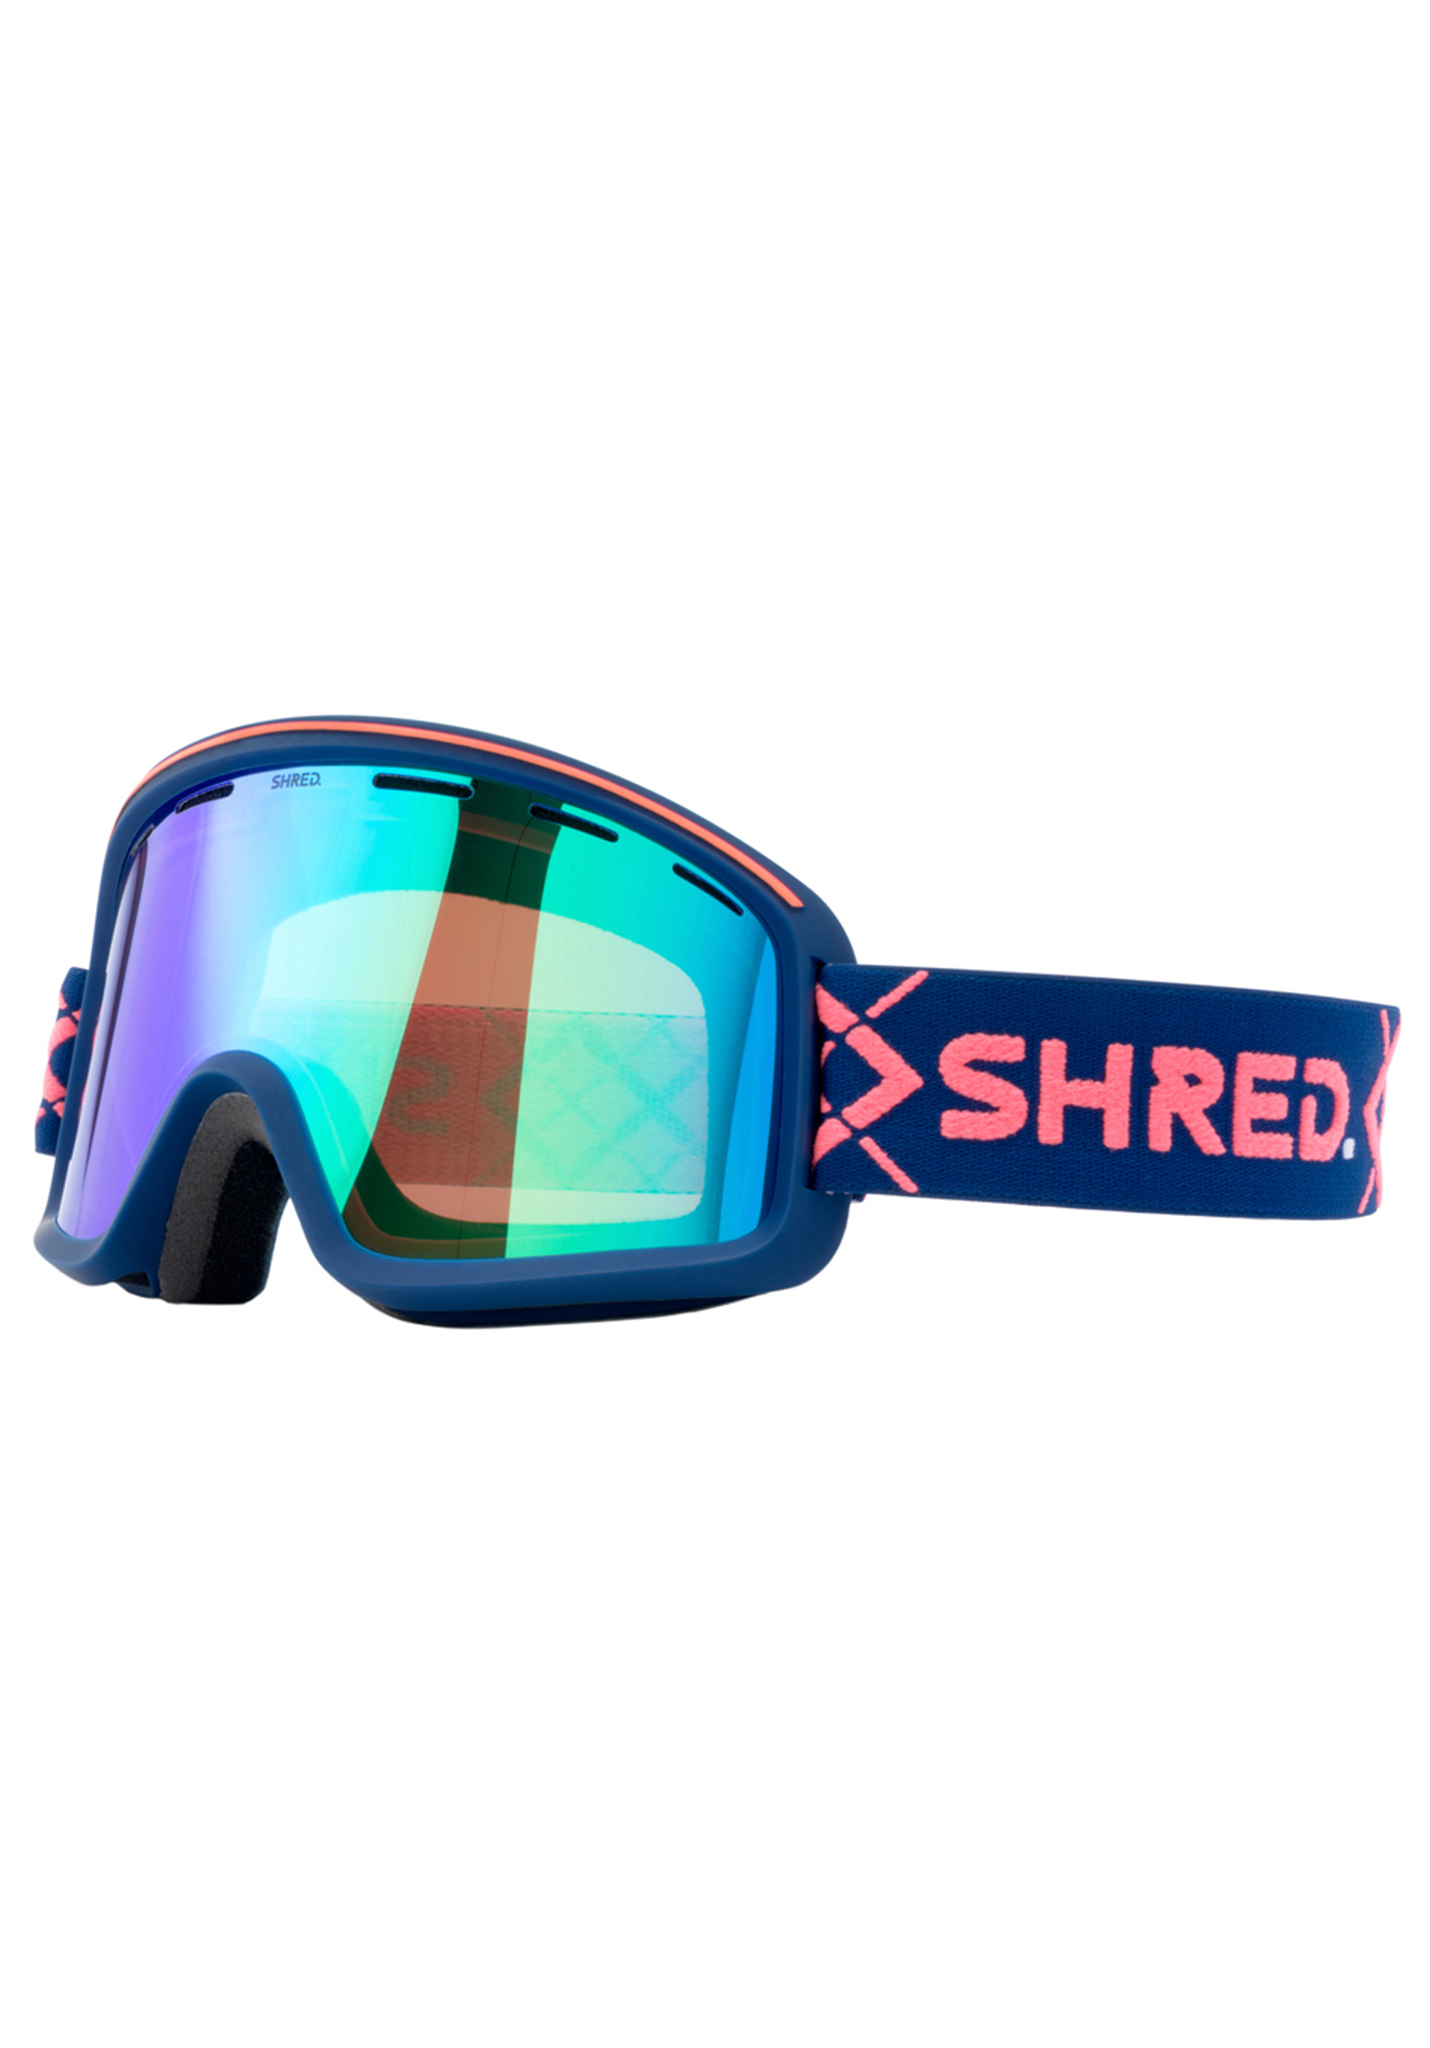 Shred Monocle Snowboardbrillen bigshow navy/cbl plama spiegel One Size